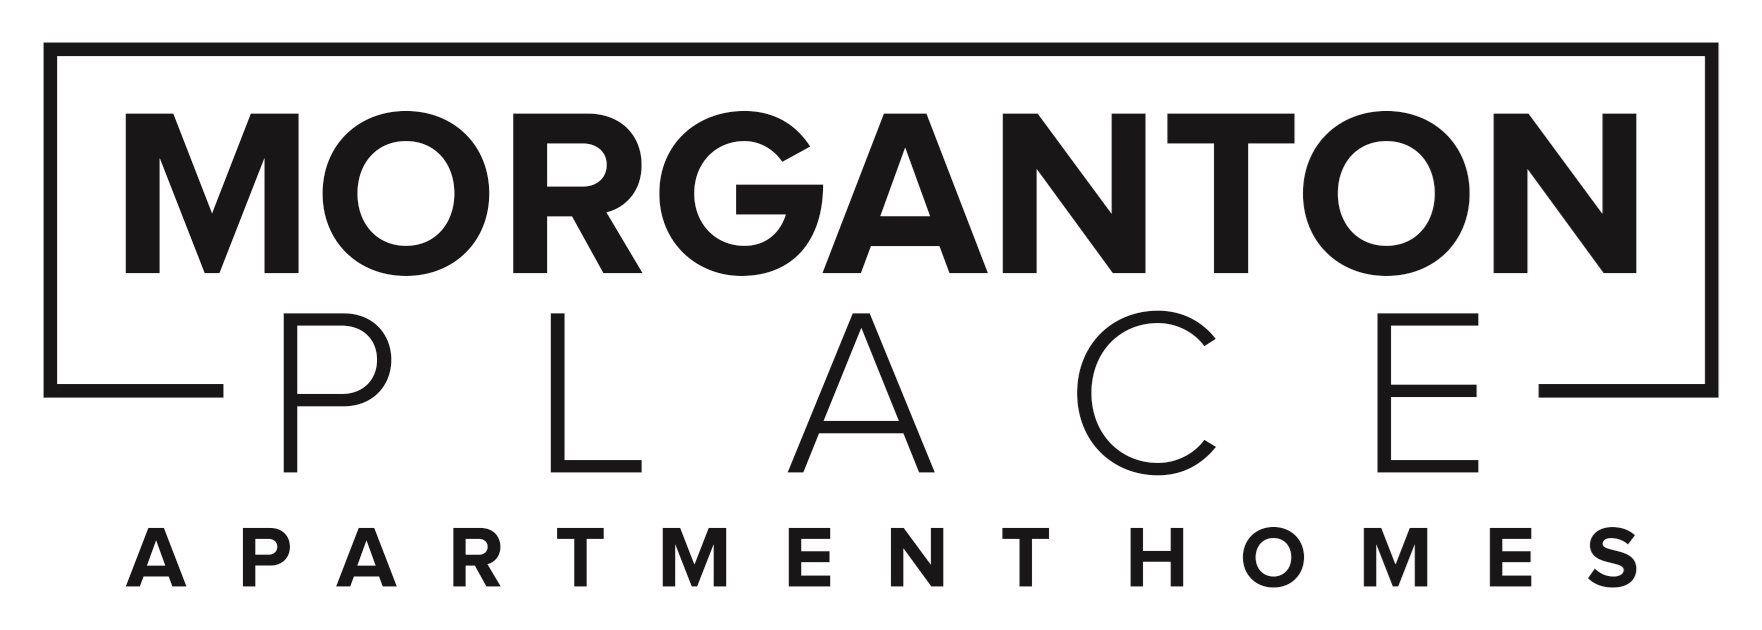 Fayetteville Logo - Morganton Place Apartments | Apartments in Fayetteville, NC